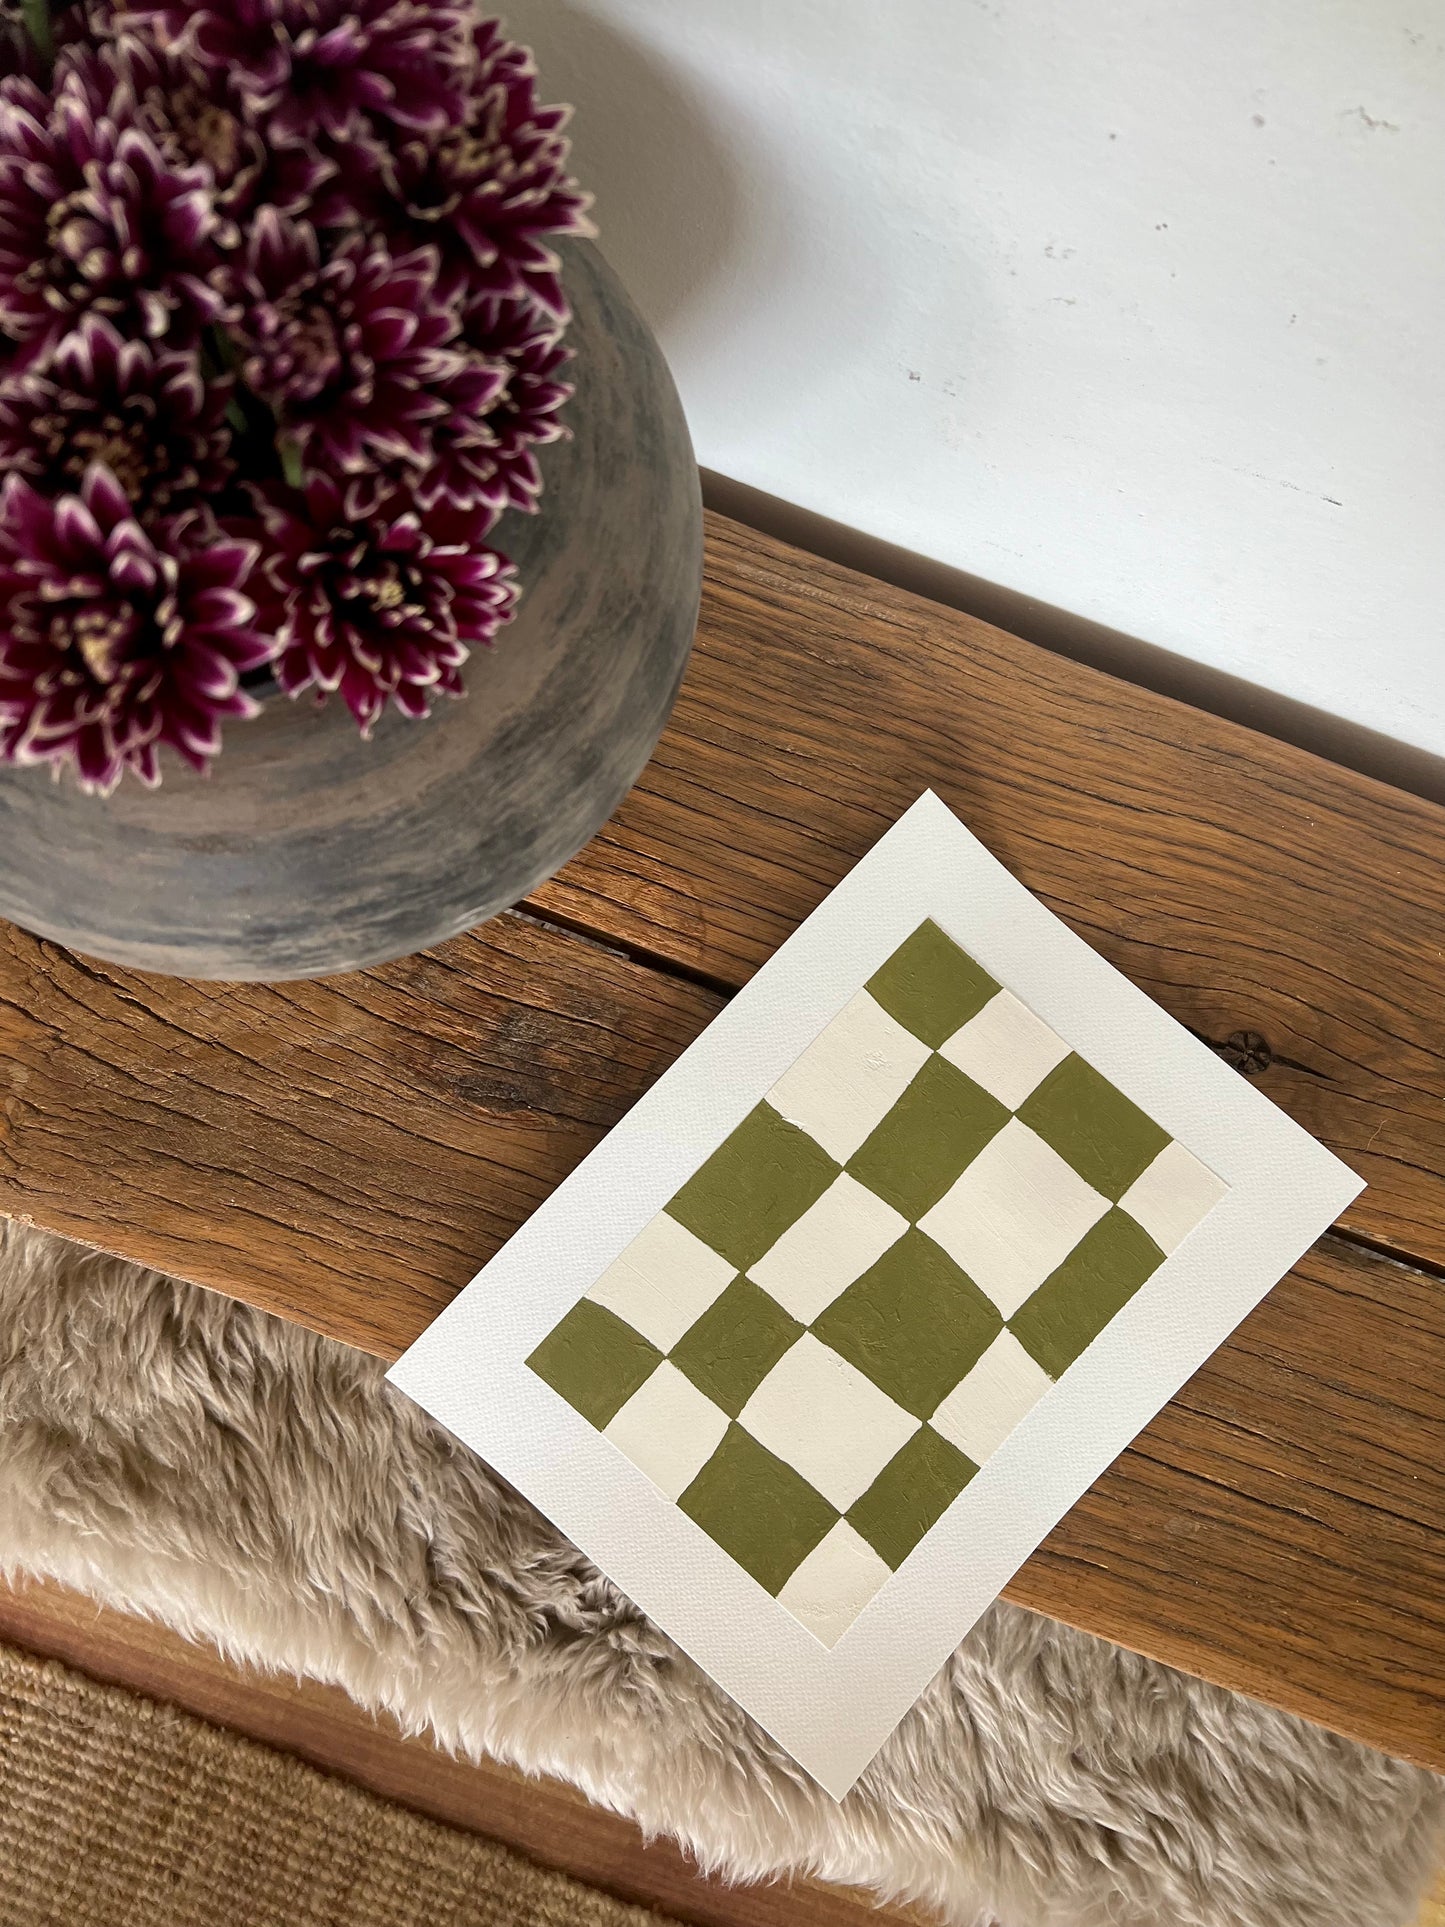 ‘Olive Checker Board’ on Paper II